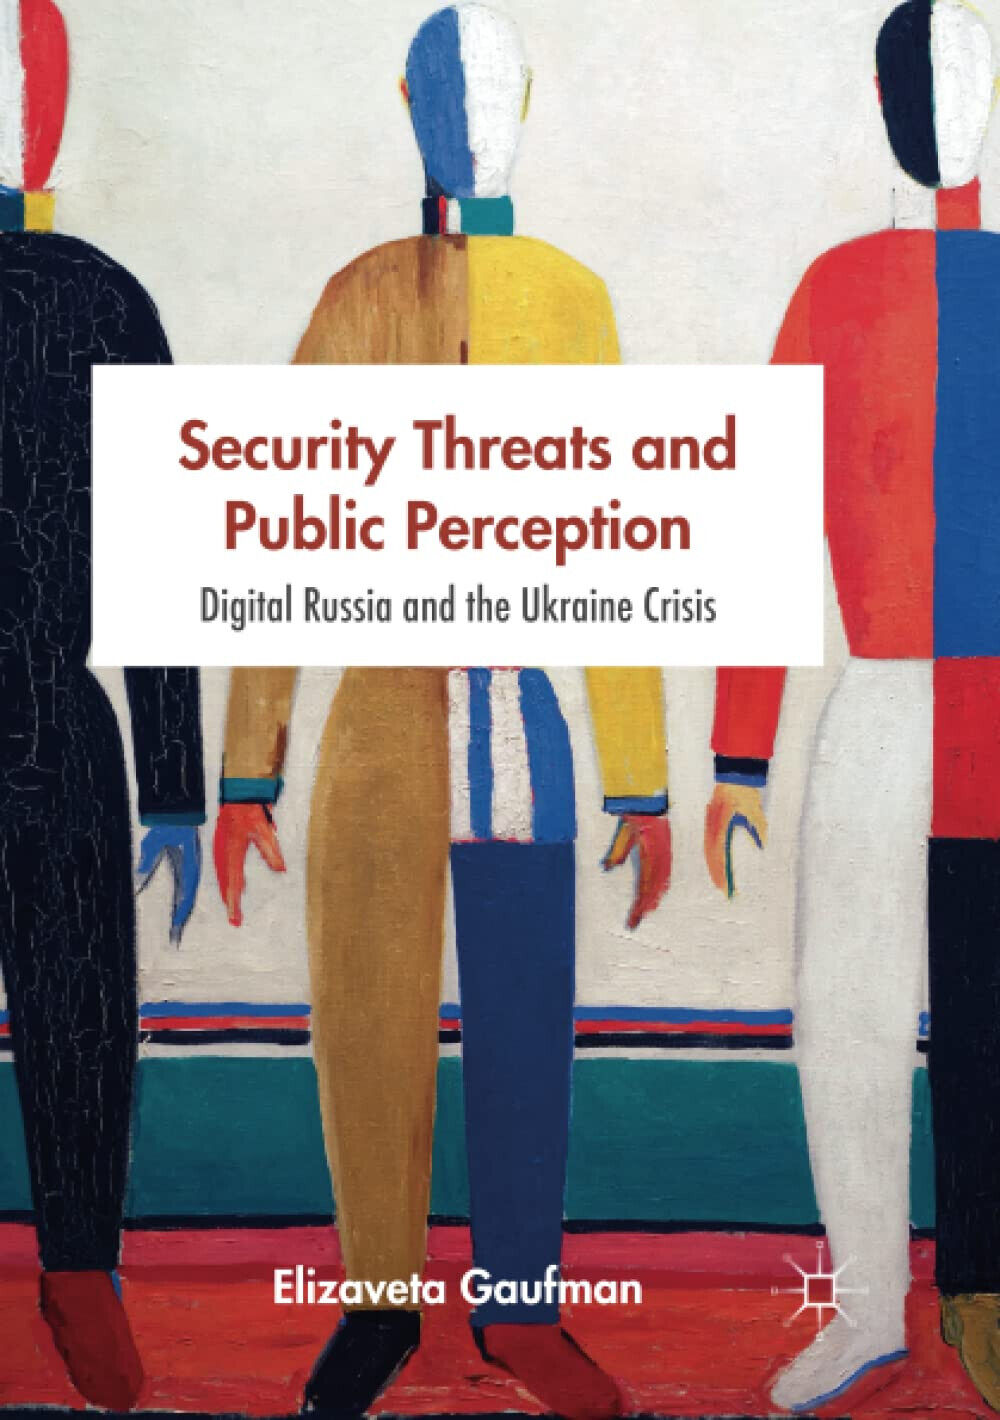 Security Threats and Public Perception - Elizaveta Gaufman - Springer, 2018